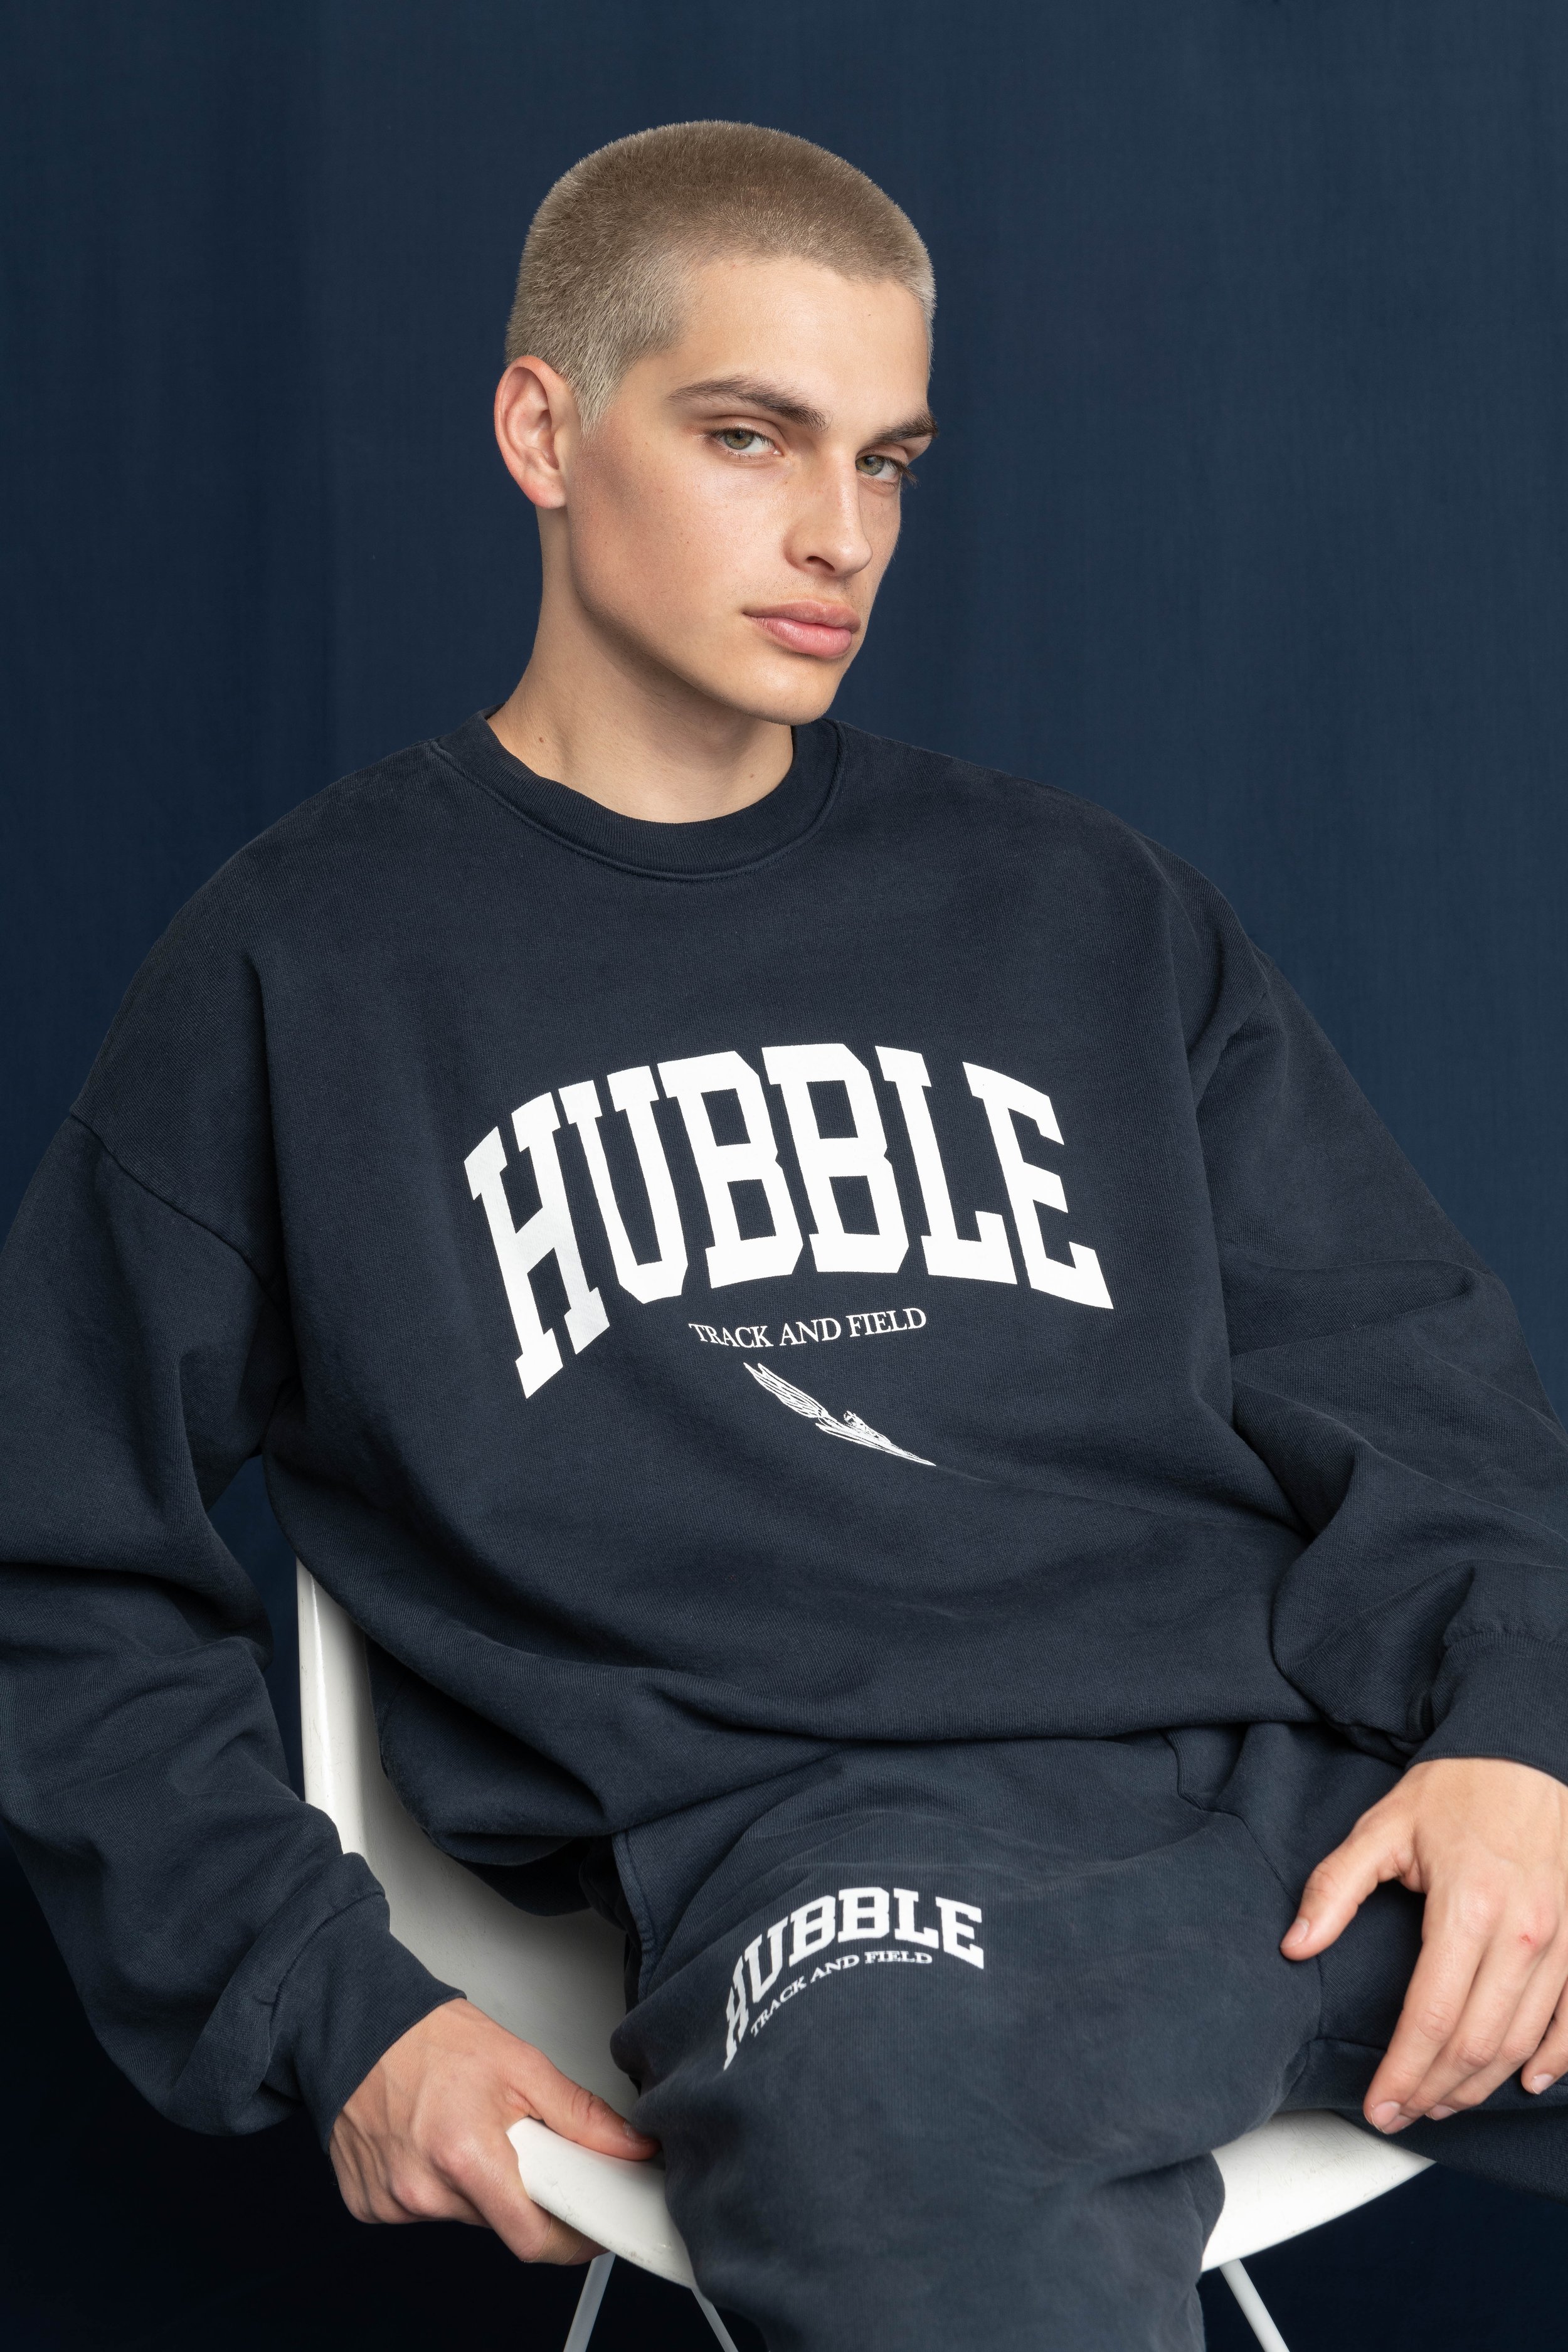 Cameron Porras X Hubble Clothing